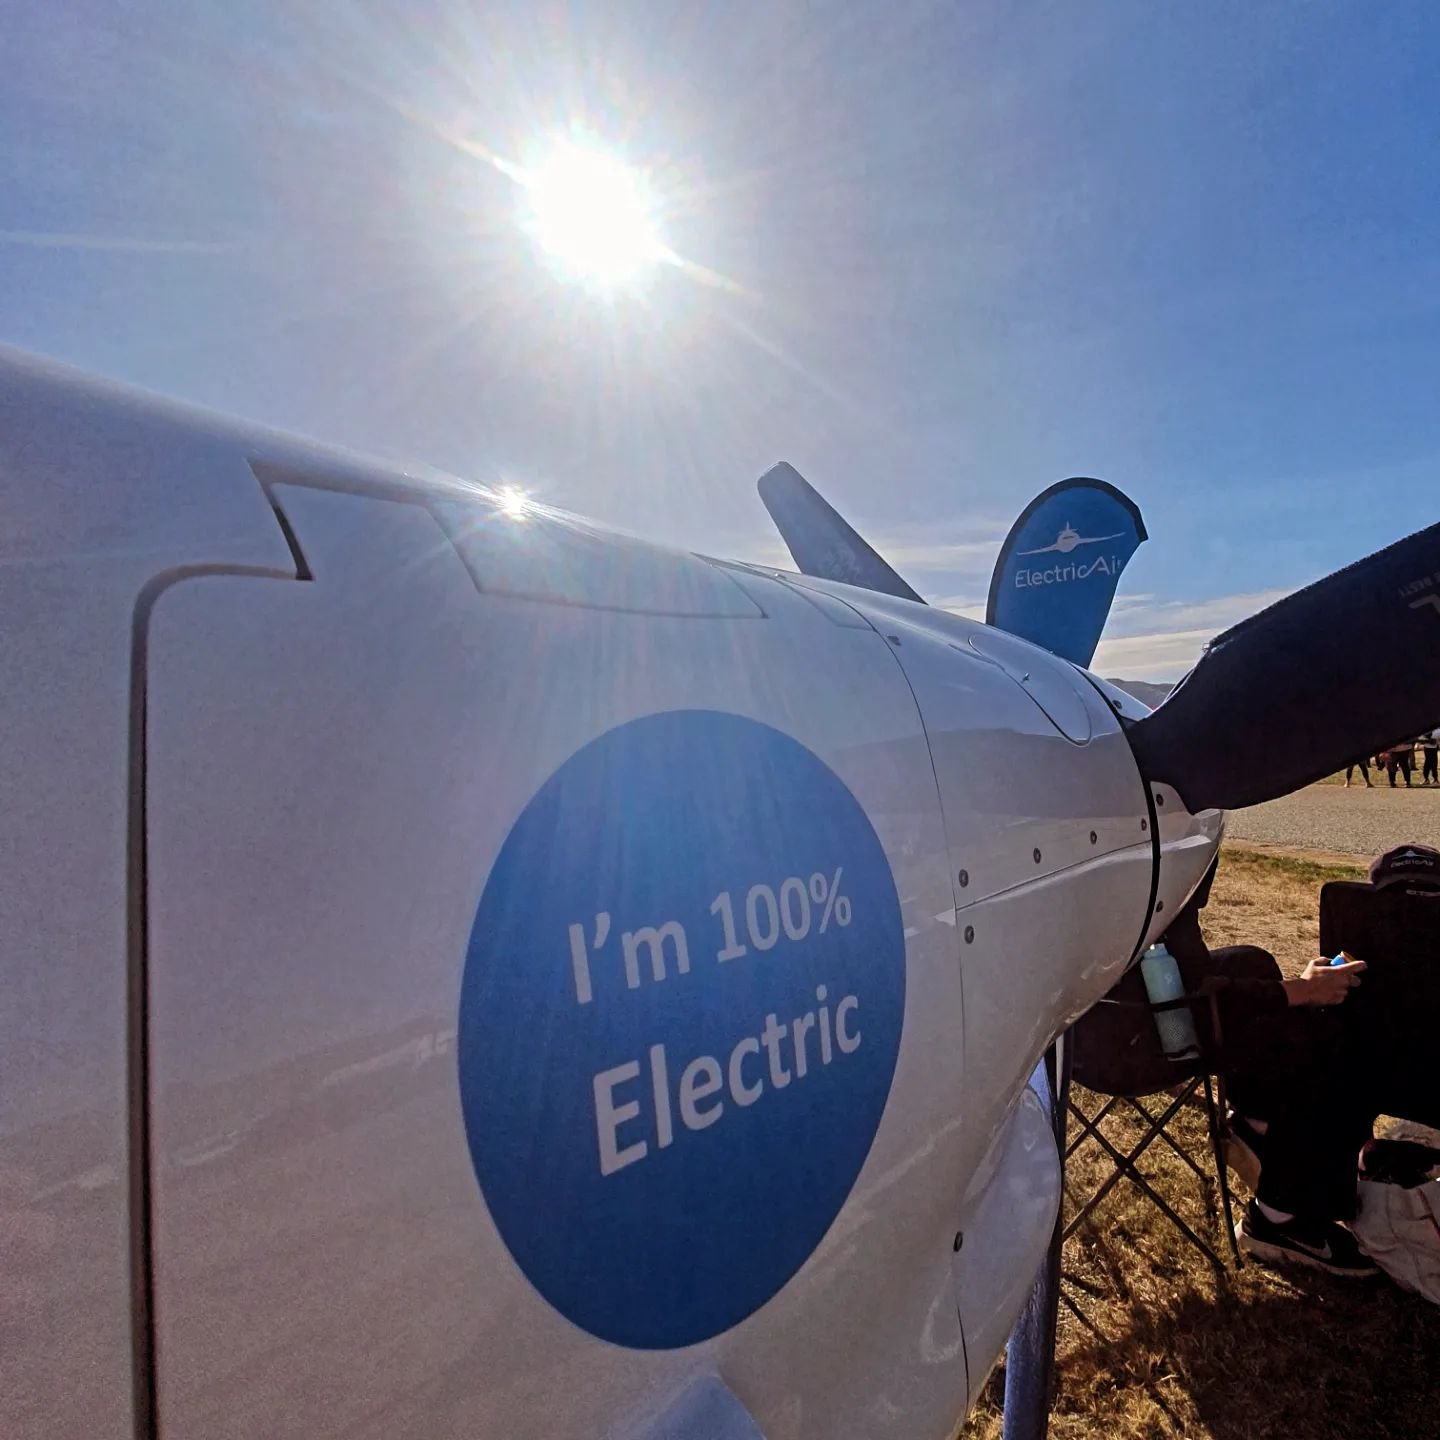 NZ's Electric Plane sunbathing  @warbirdsoverwanaka 
#electricflight